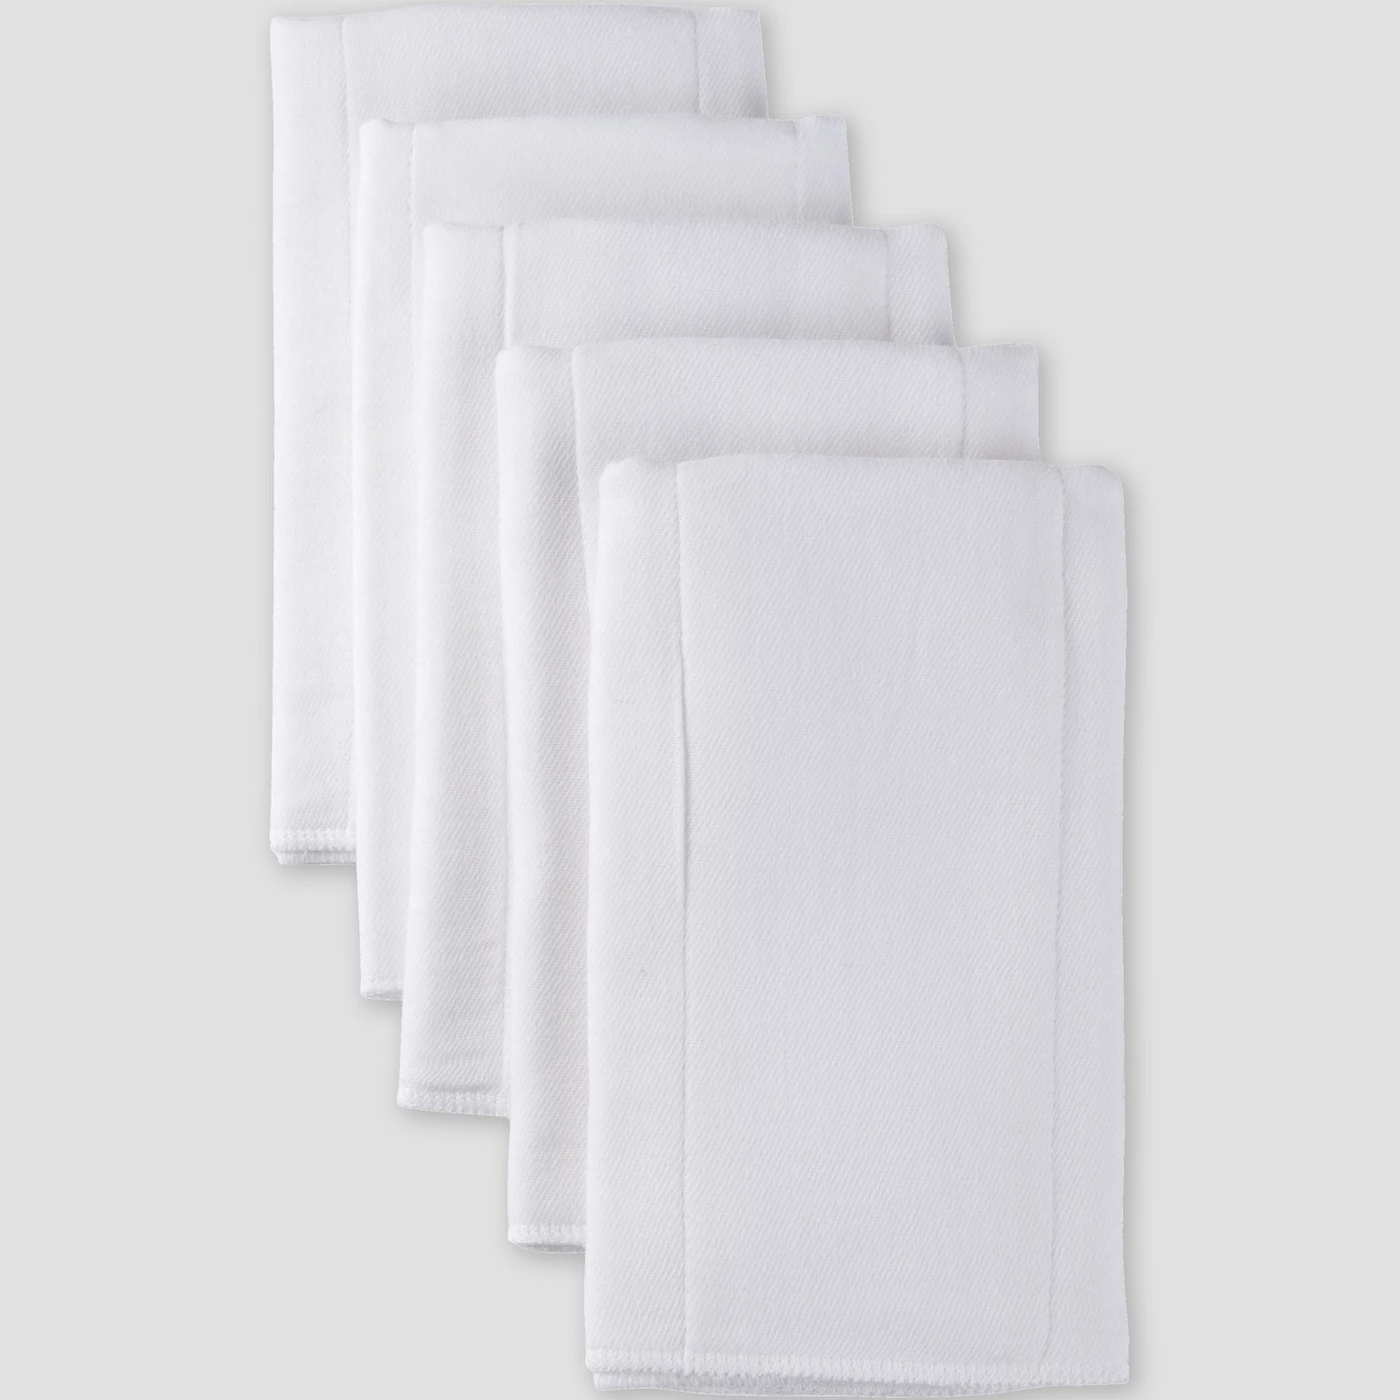 Gerber Baby Organic Cotton 5pk Prefold Birdseye Diaper - White One Size - image 1 of 2